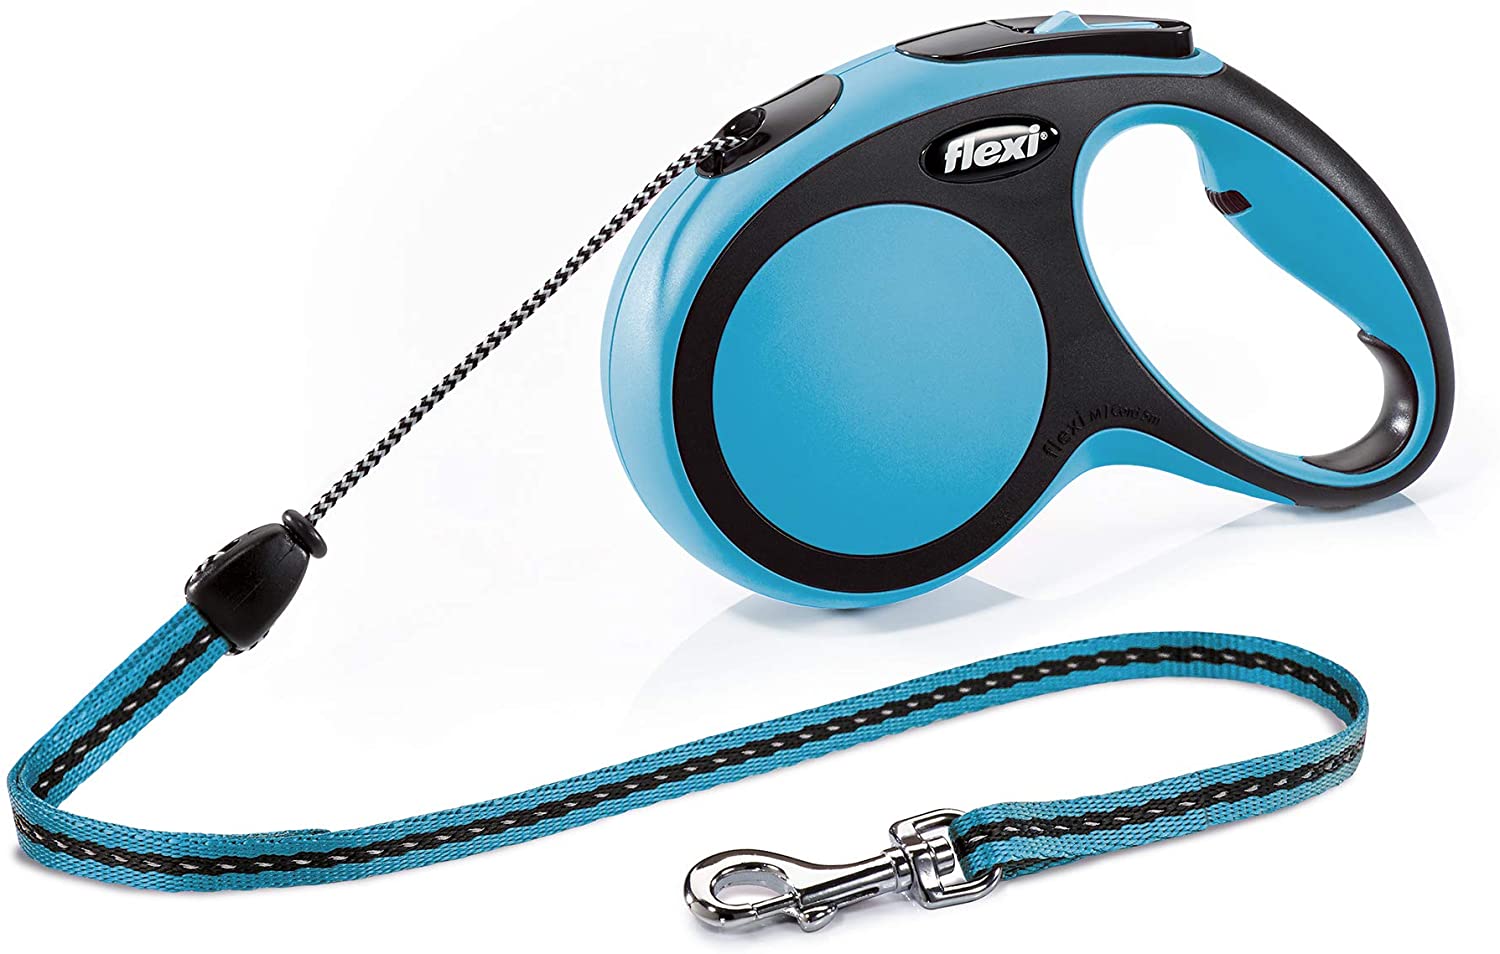  Croci C2055816 Llevar Perro Flexi Confort Cable Azul 